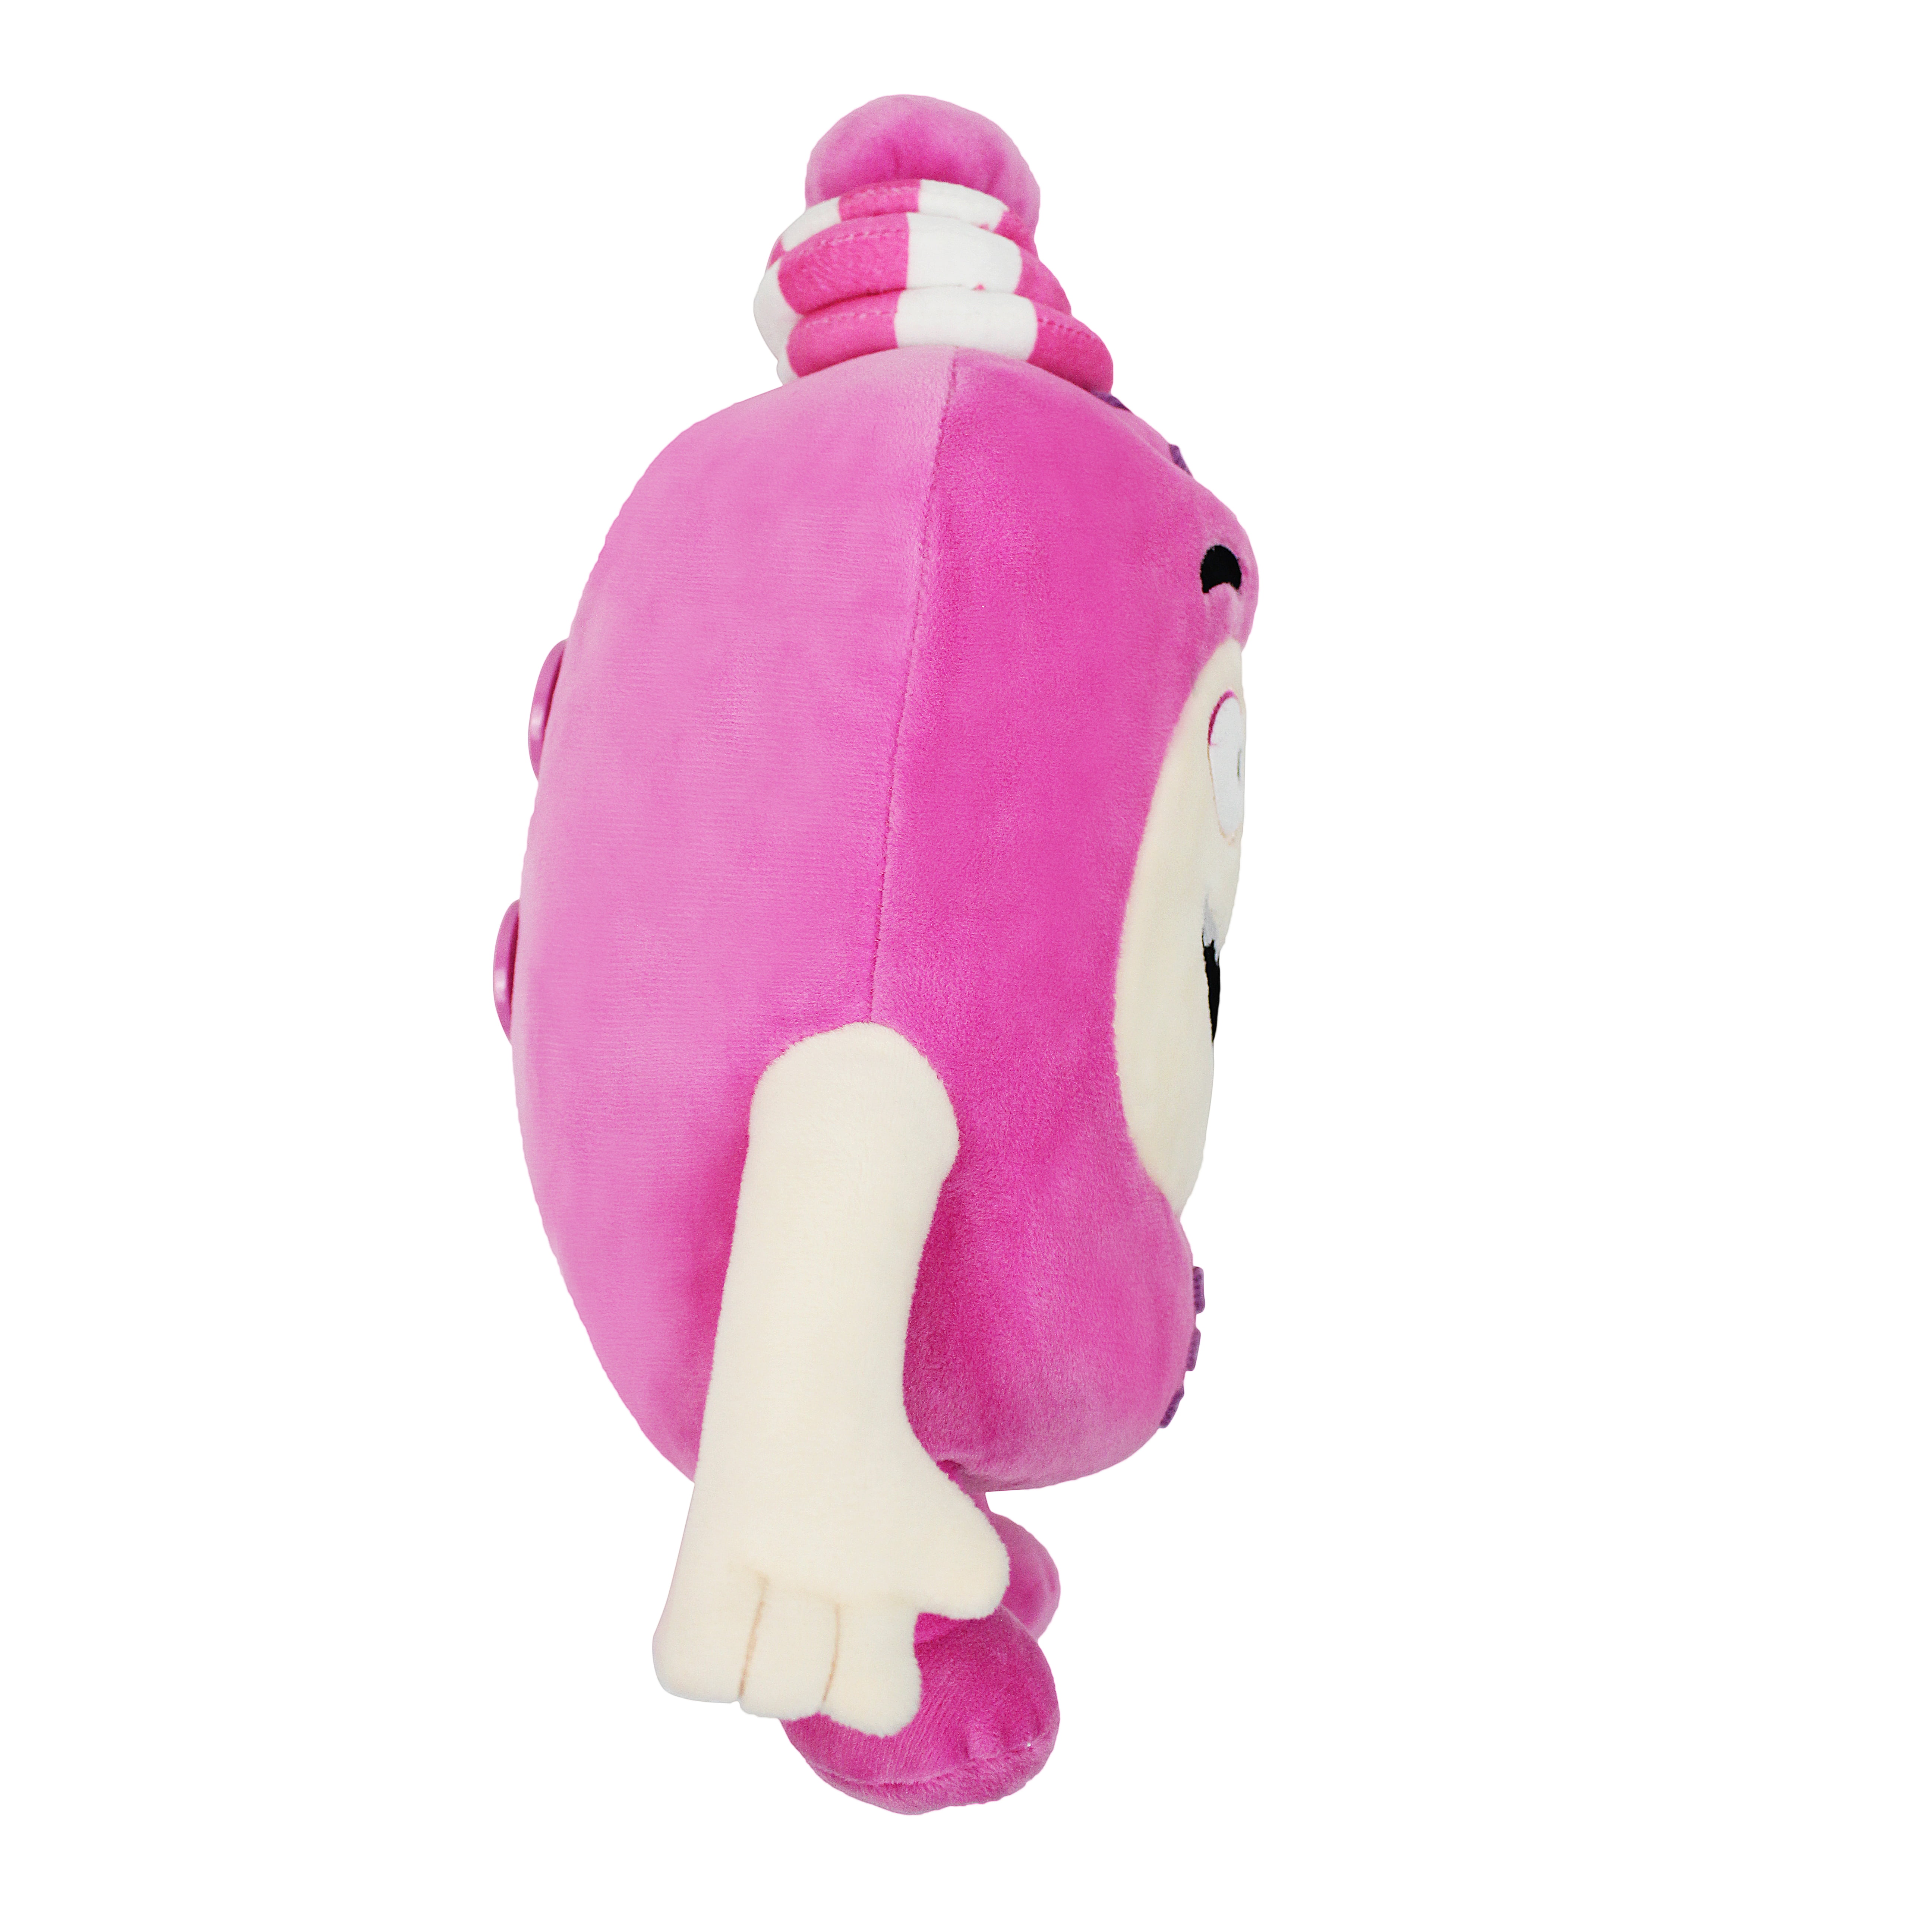 Oddbods NEWT Plush Soft Toy 12 cm5'' Brand New 